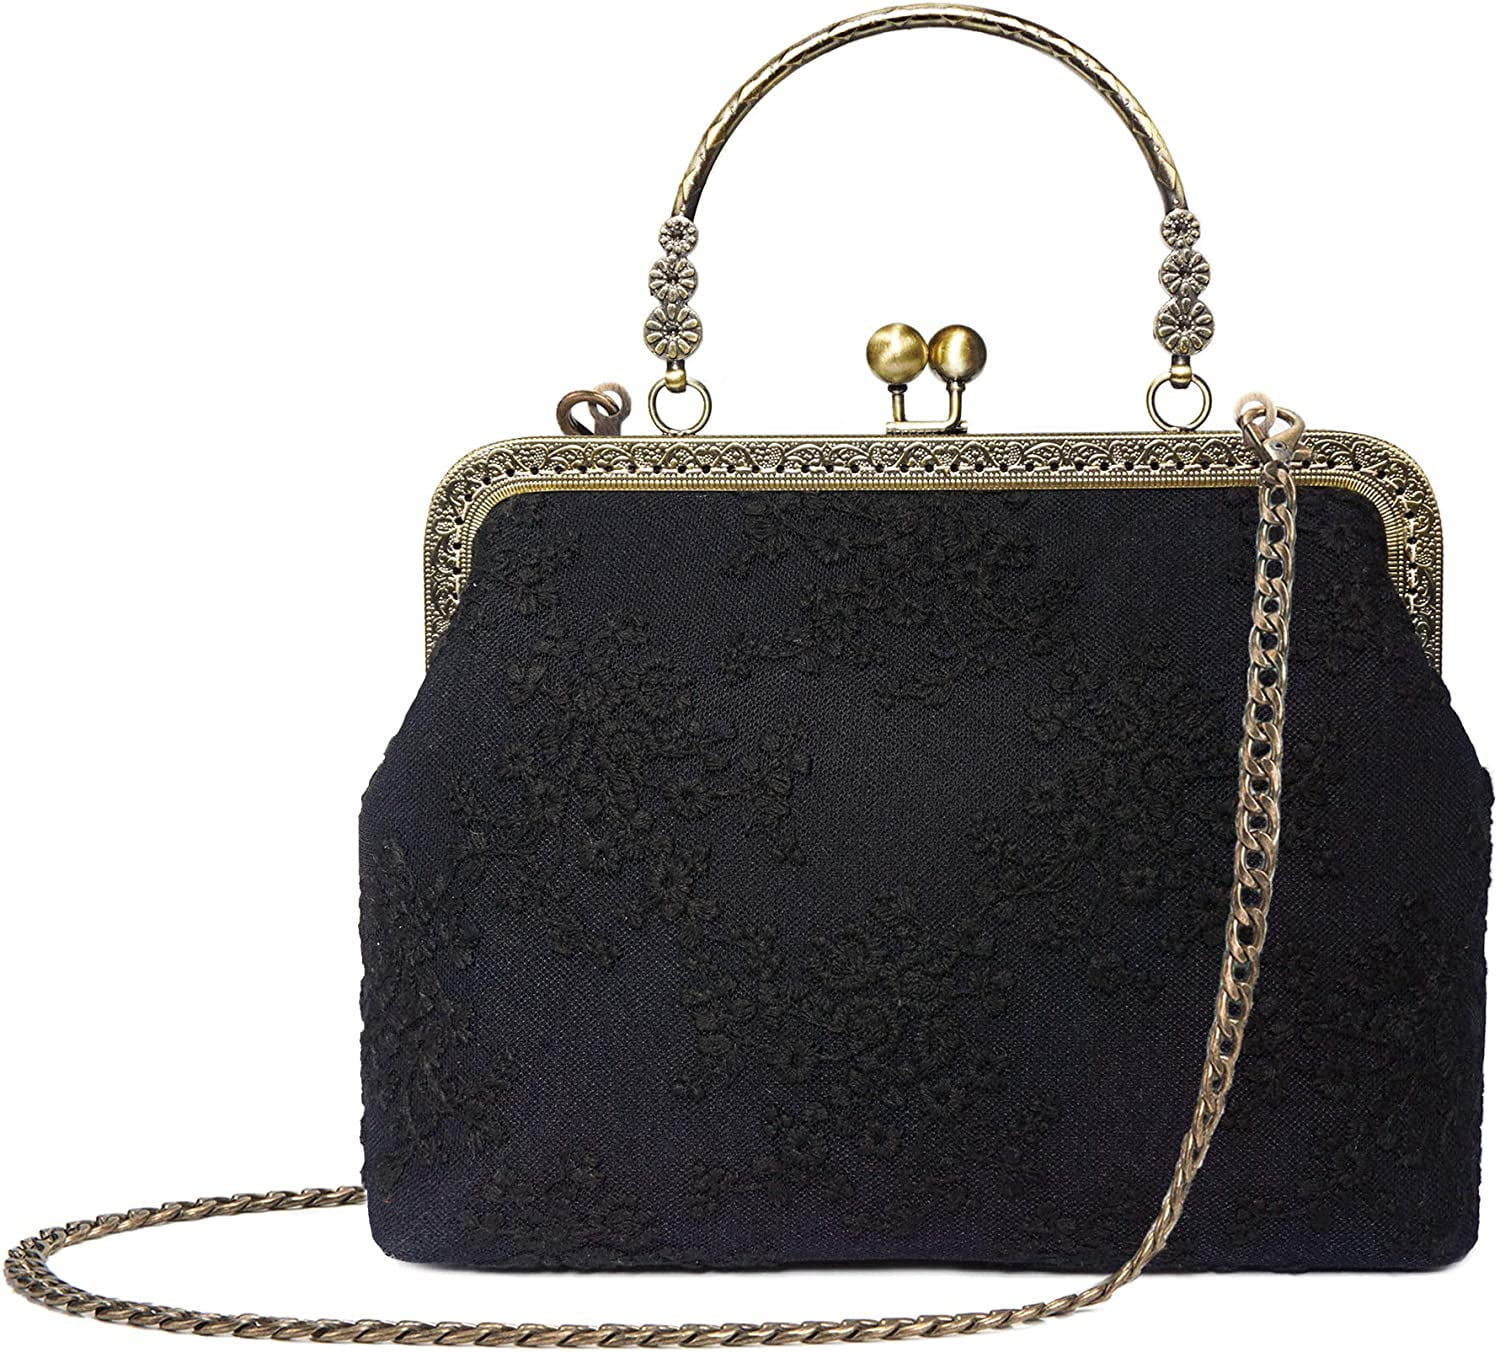 Buy Abuyall Women Small Retro Purse Vintage Top Handle Handbag Kiss Lock  Shoulder Bag B at Amazon.in